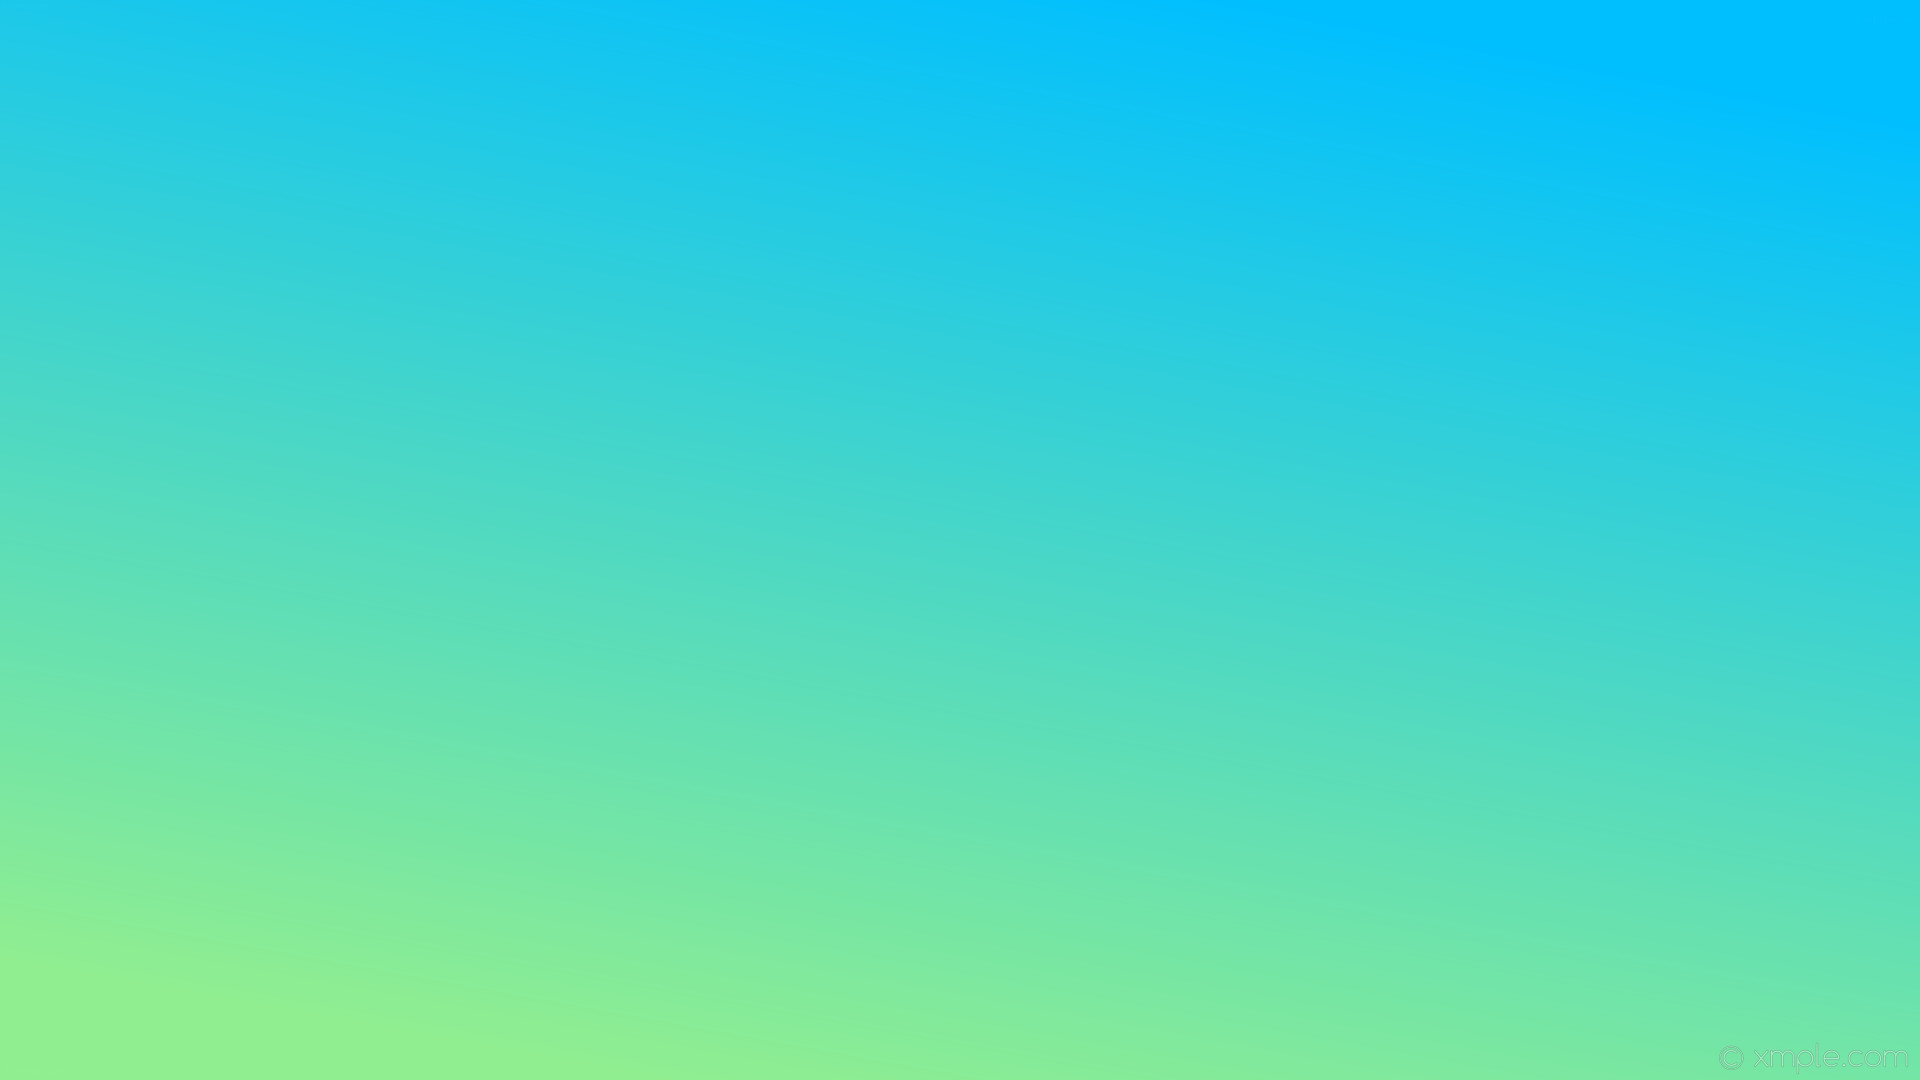 fond d'écran bleu vif,vert,bleu,aqua,jour,turquoise